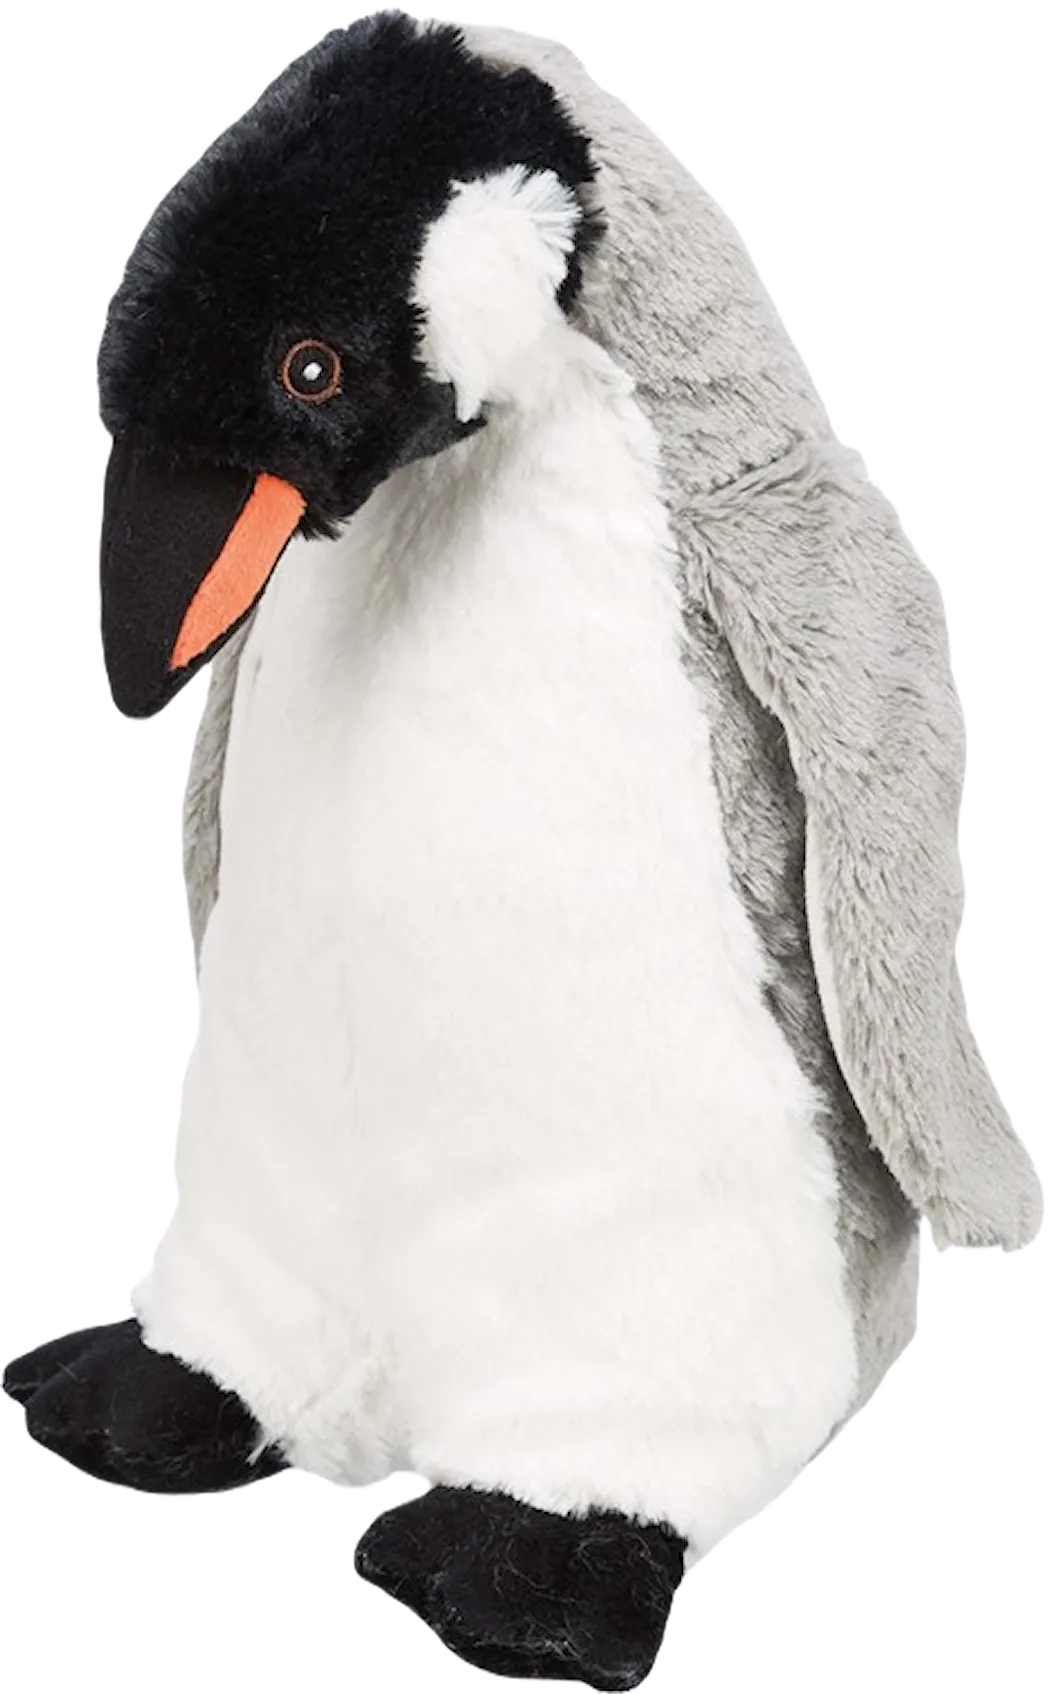 Trixie Be Eco Pingvin återvunnen plysch 28 cm